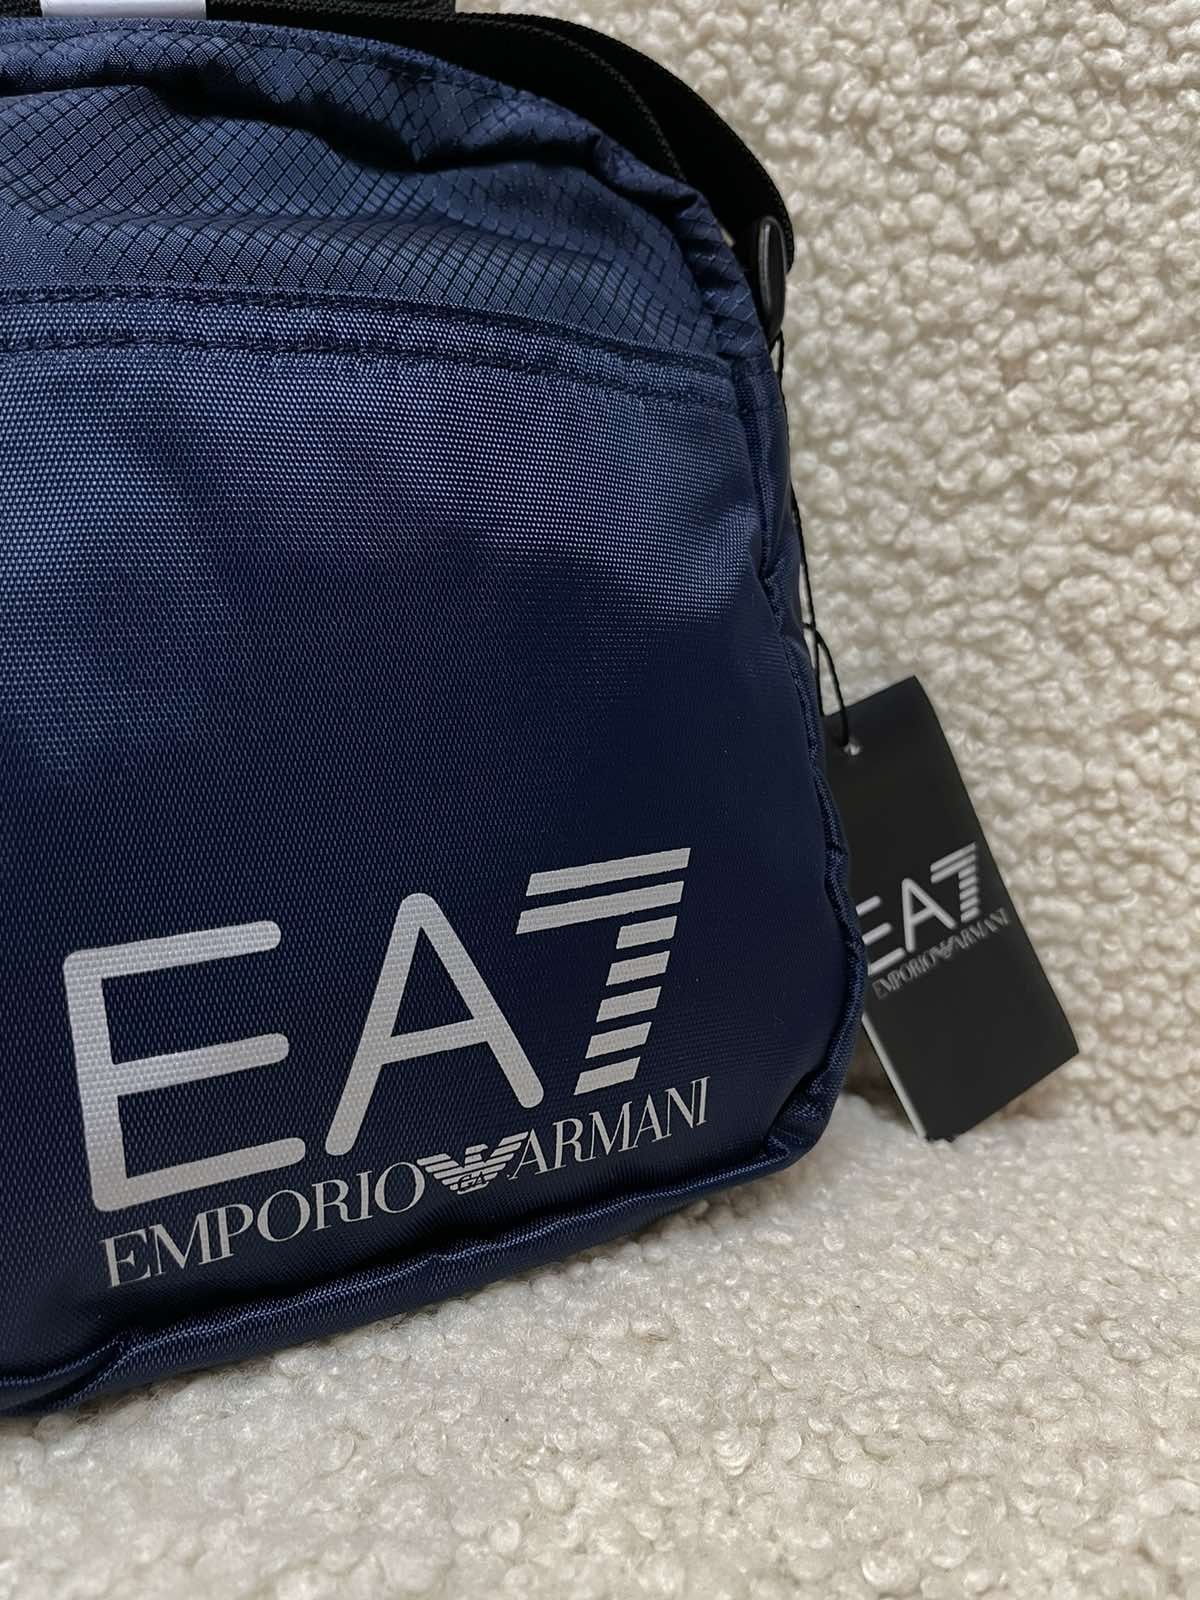 EA7,сумка,оригінал.